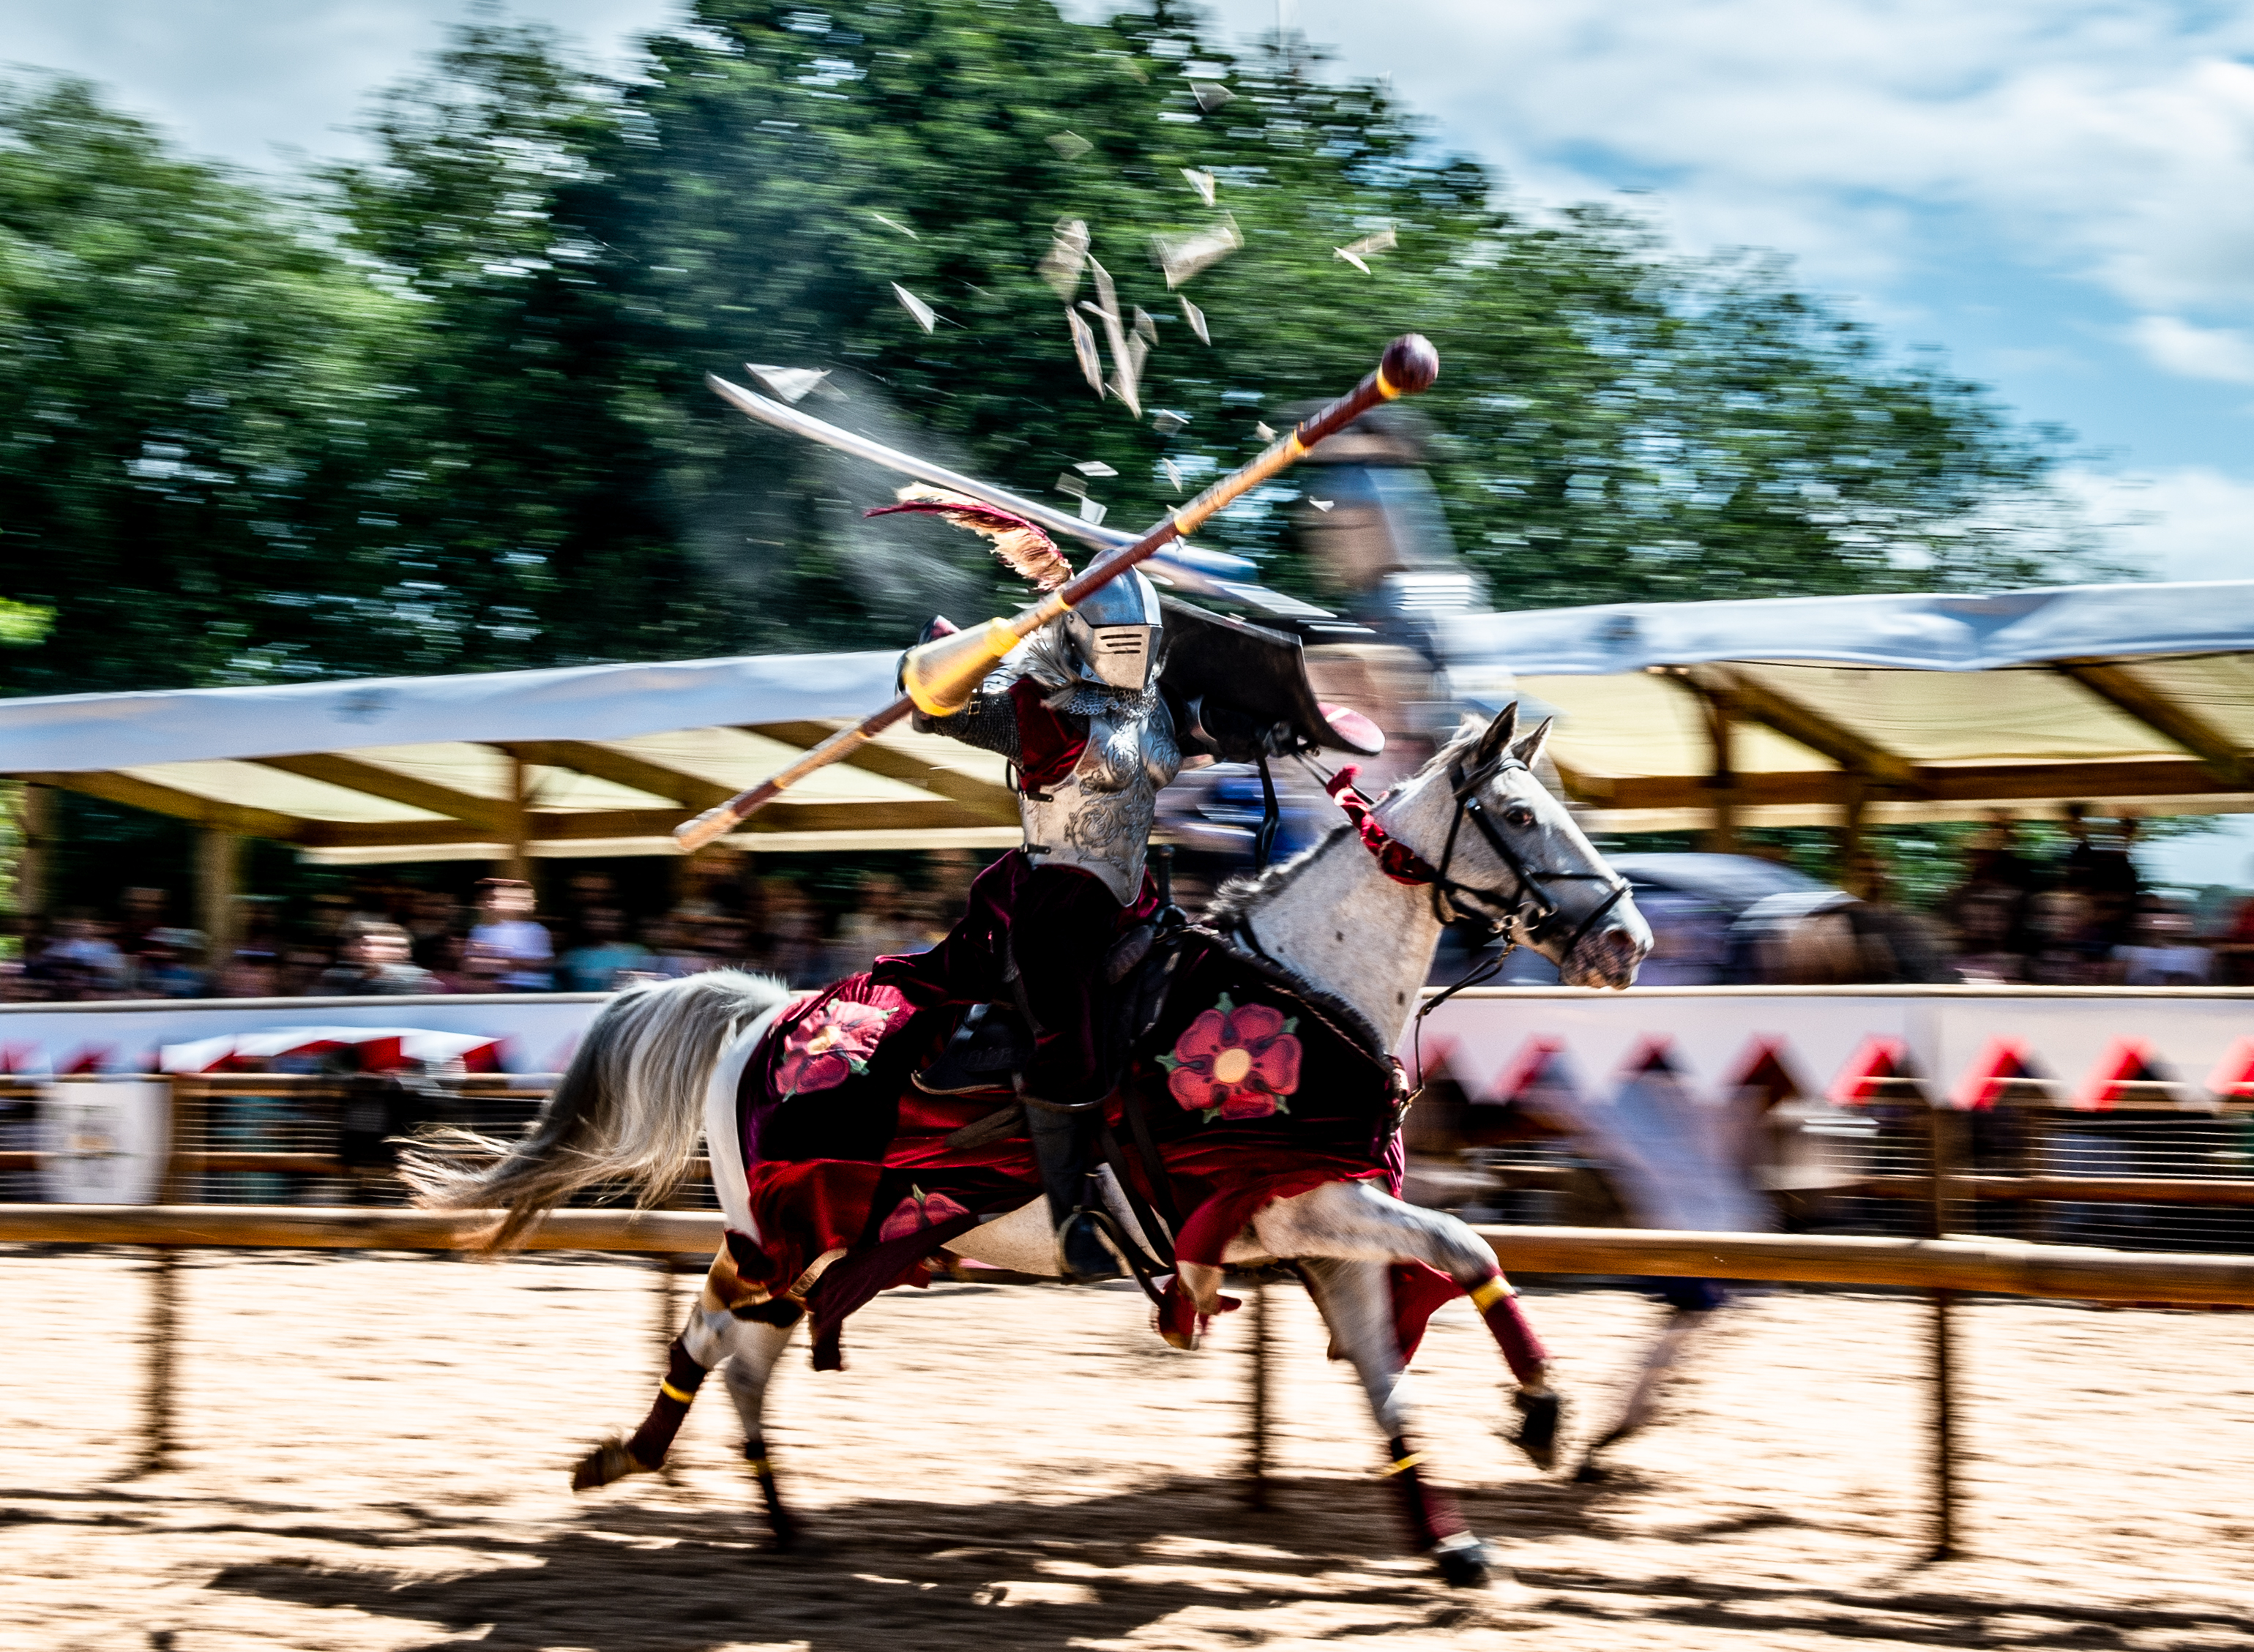 Knights jousting - clashing